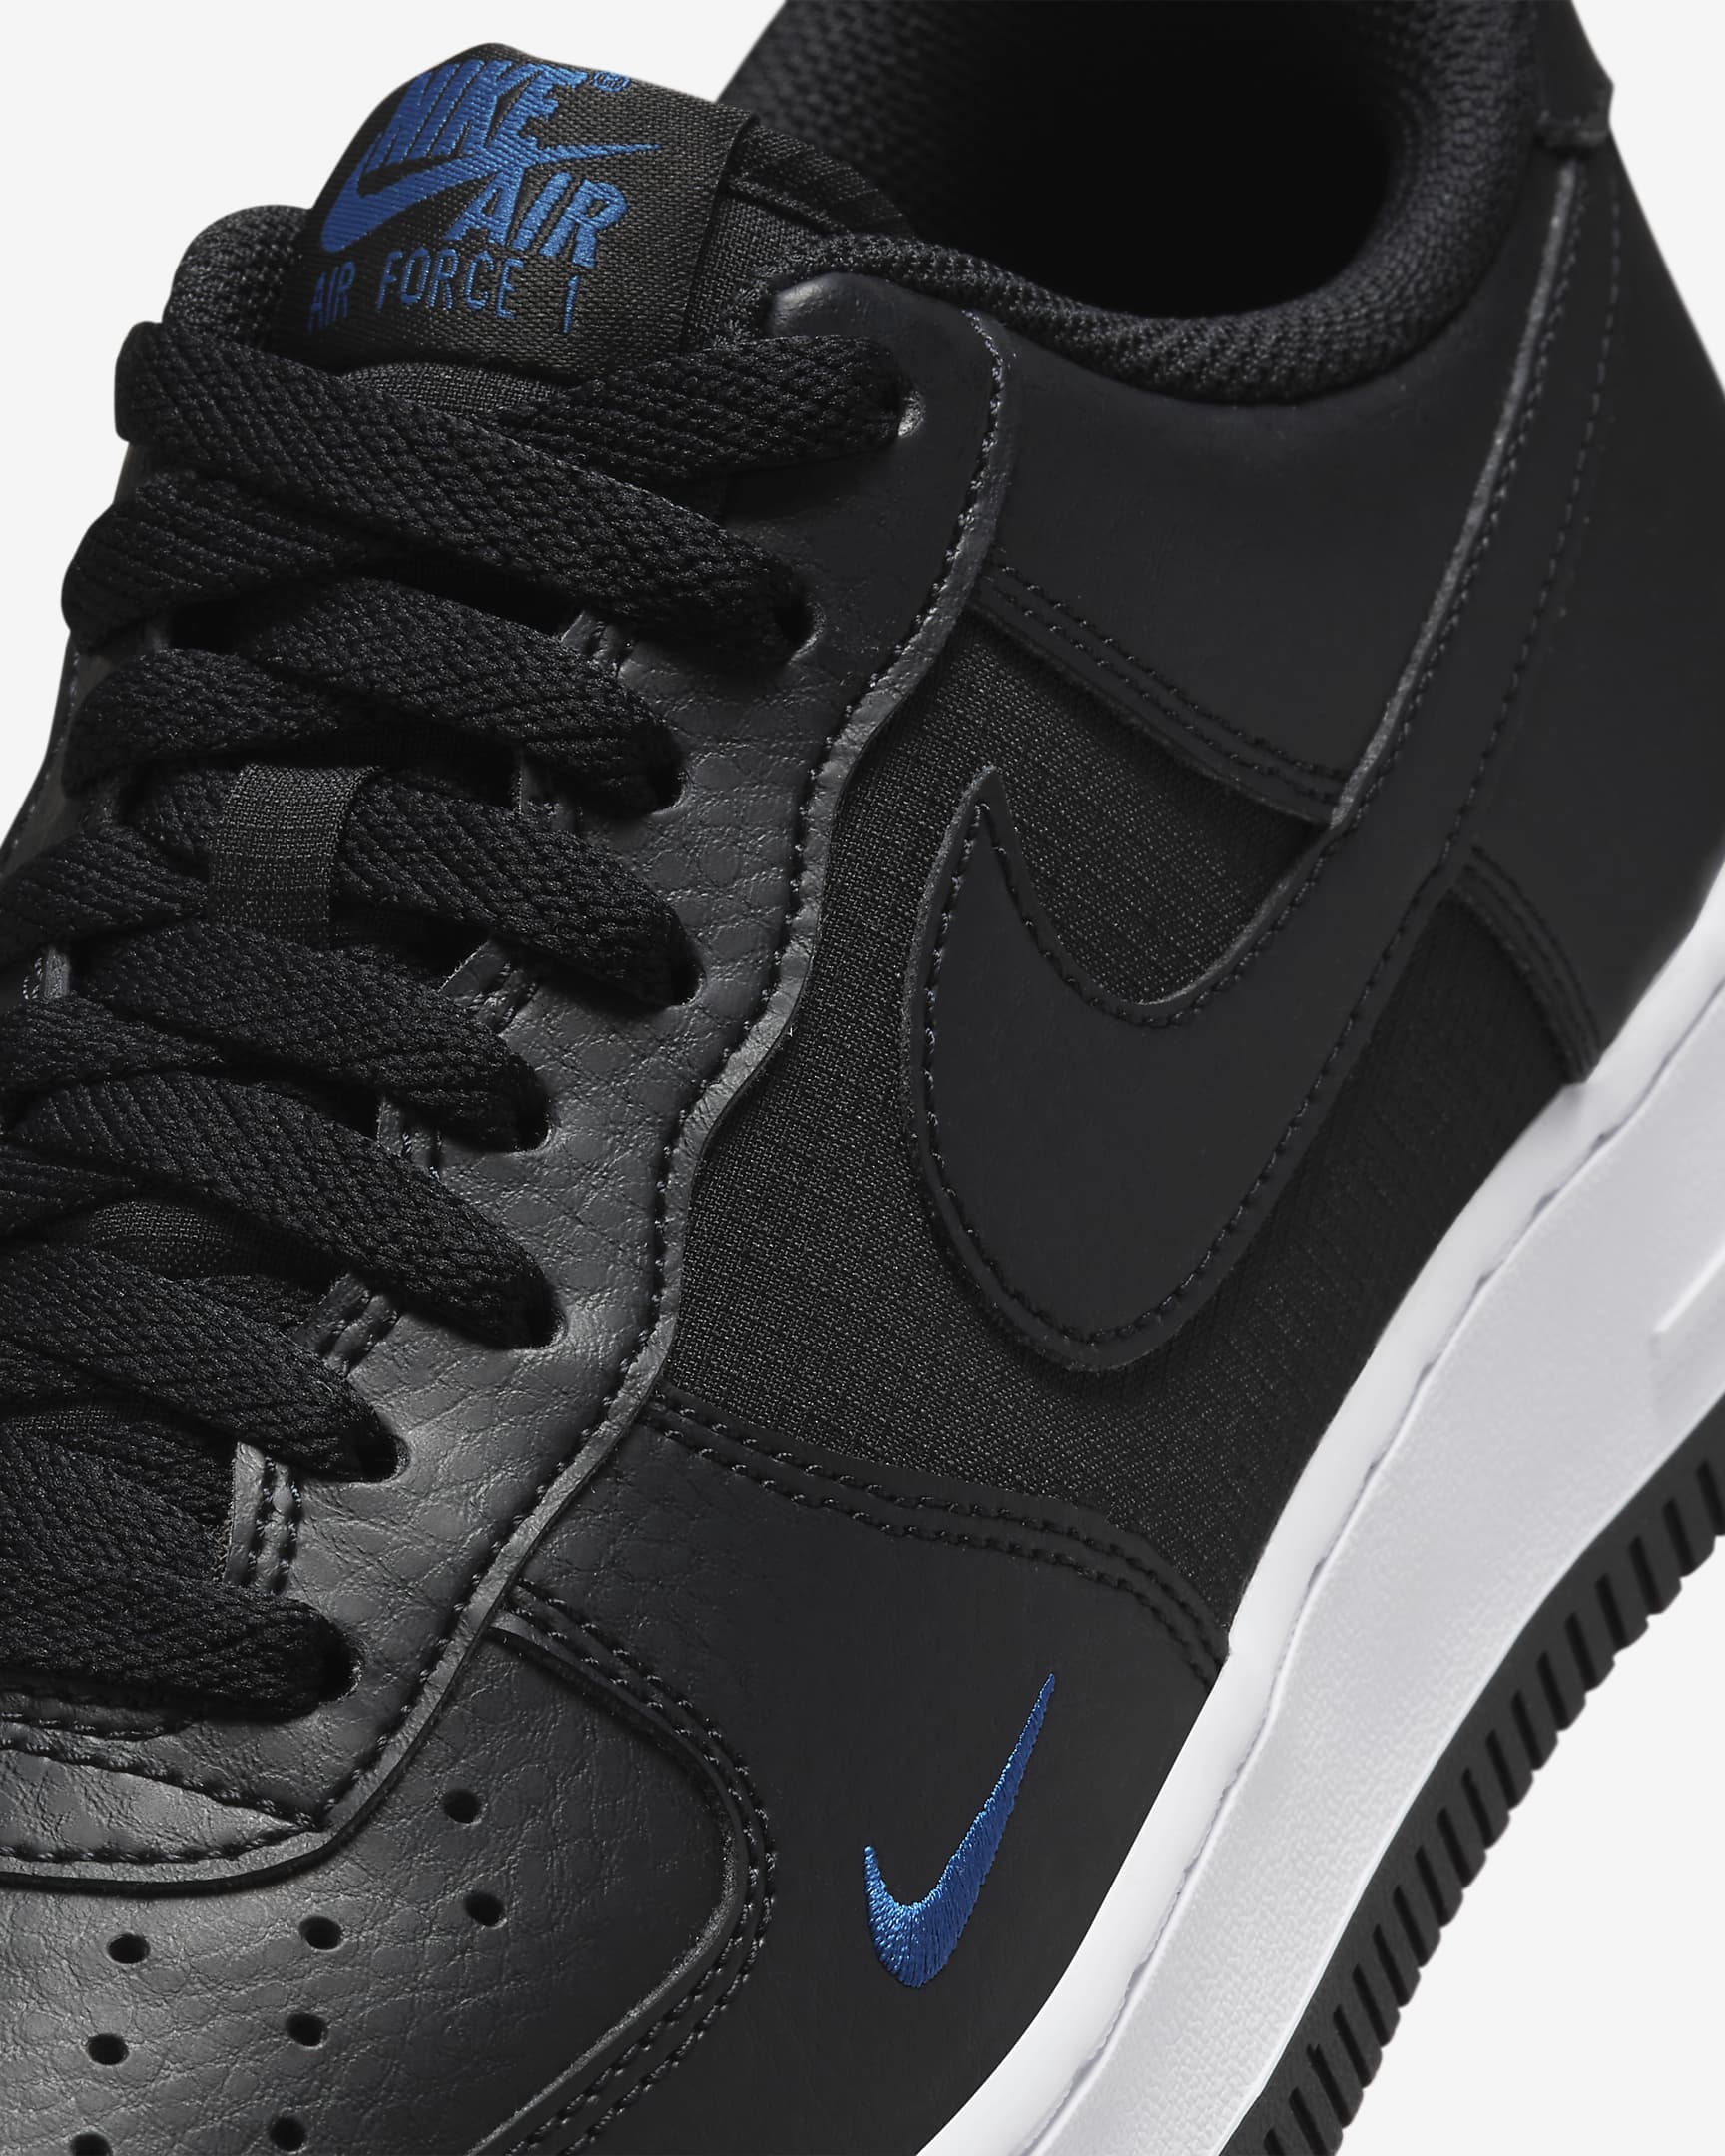 Nike Air Force 1 '07 Men's Shoes - Black/Court Blue/White/Black